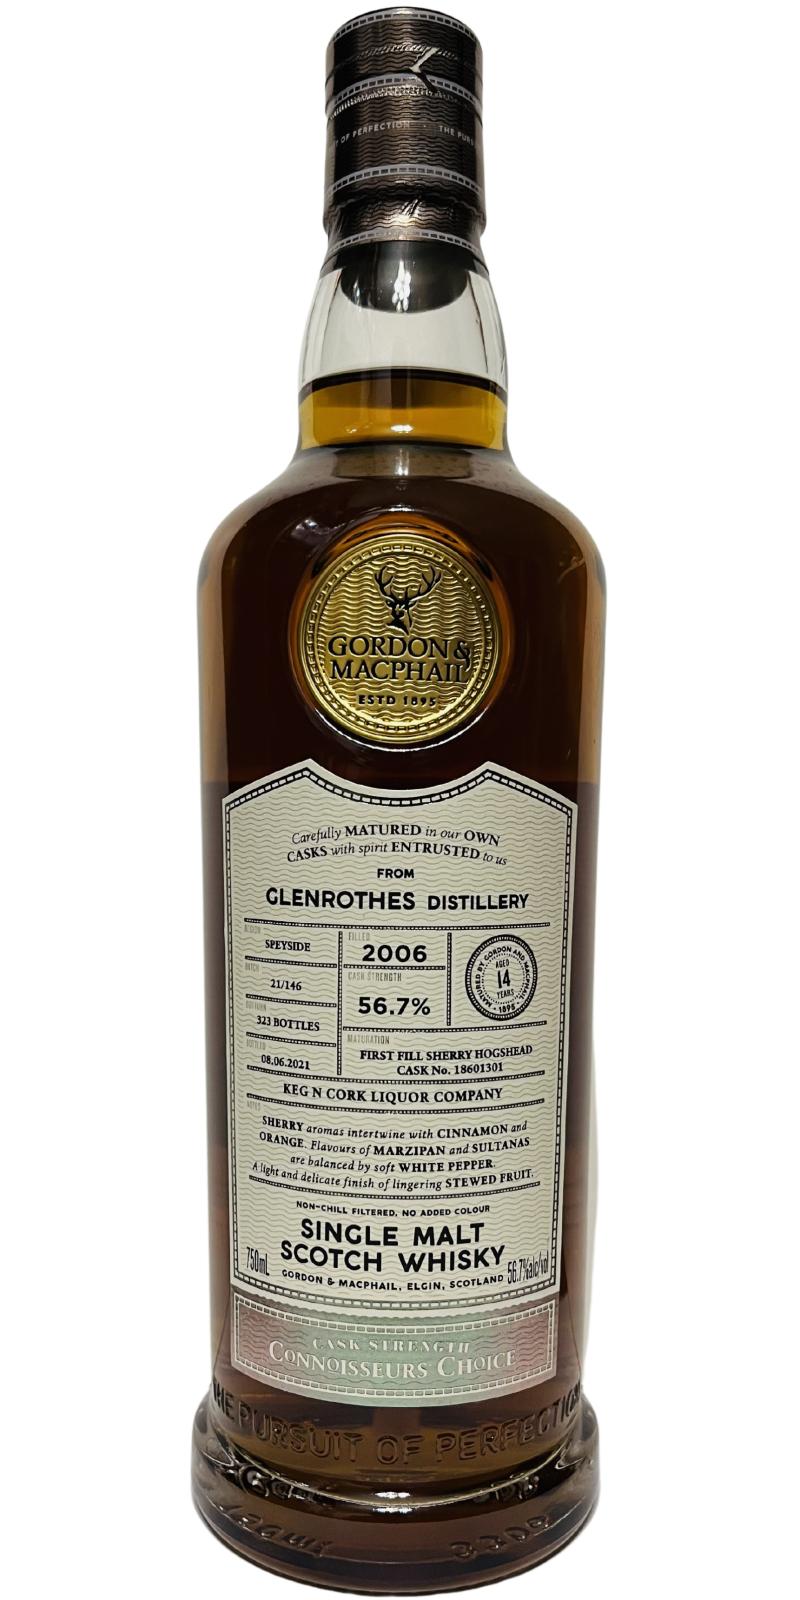 Glenrothes 2006 GM Connoisseurs Choice Cask Strength 1st Fill Sherry Hogshead Keg N Cork Liquor Company 56.7% 750ml